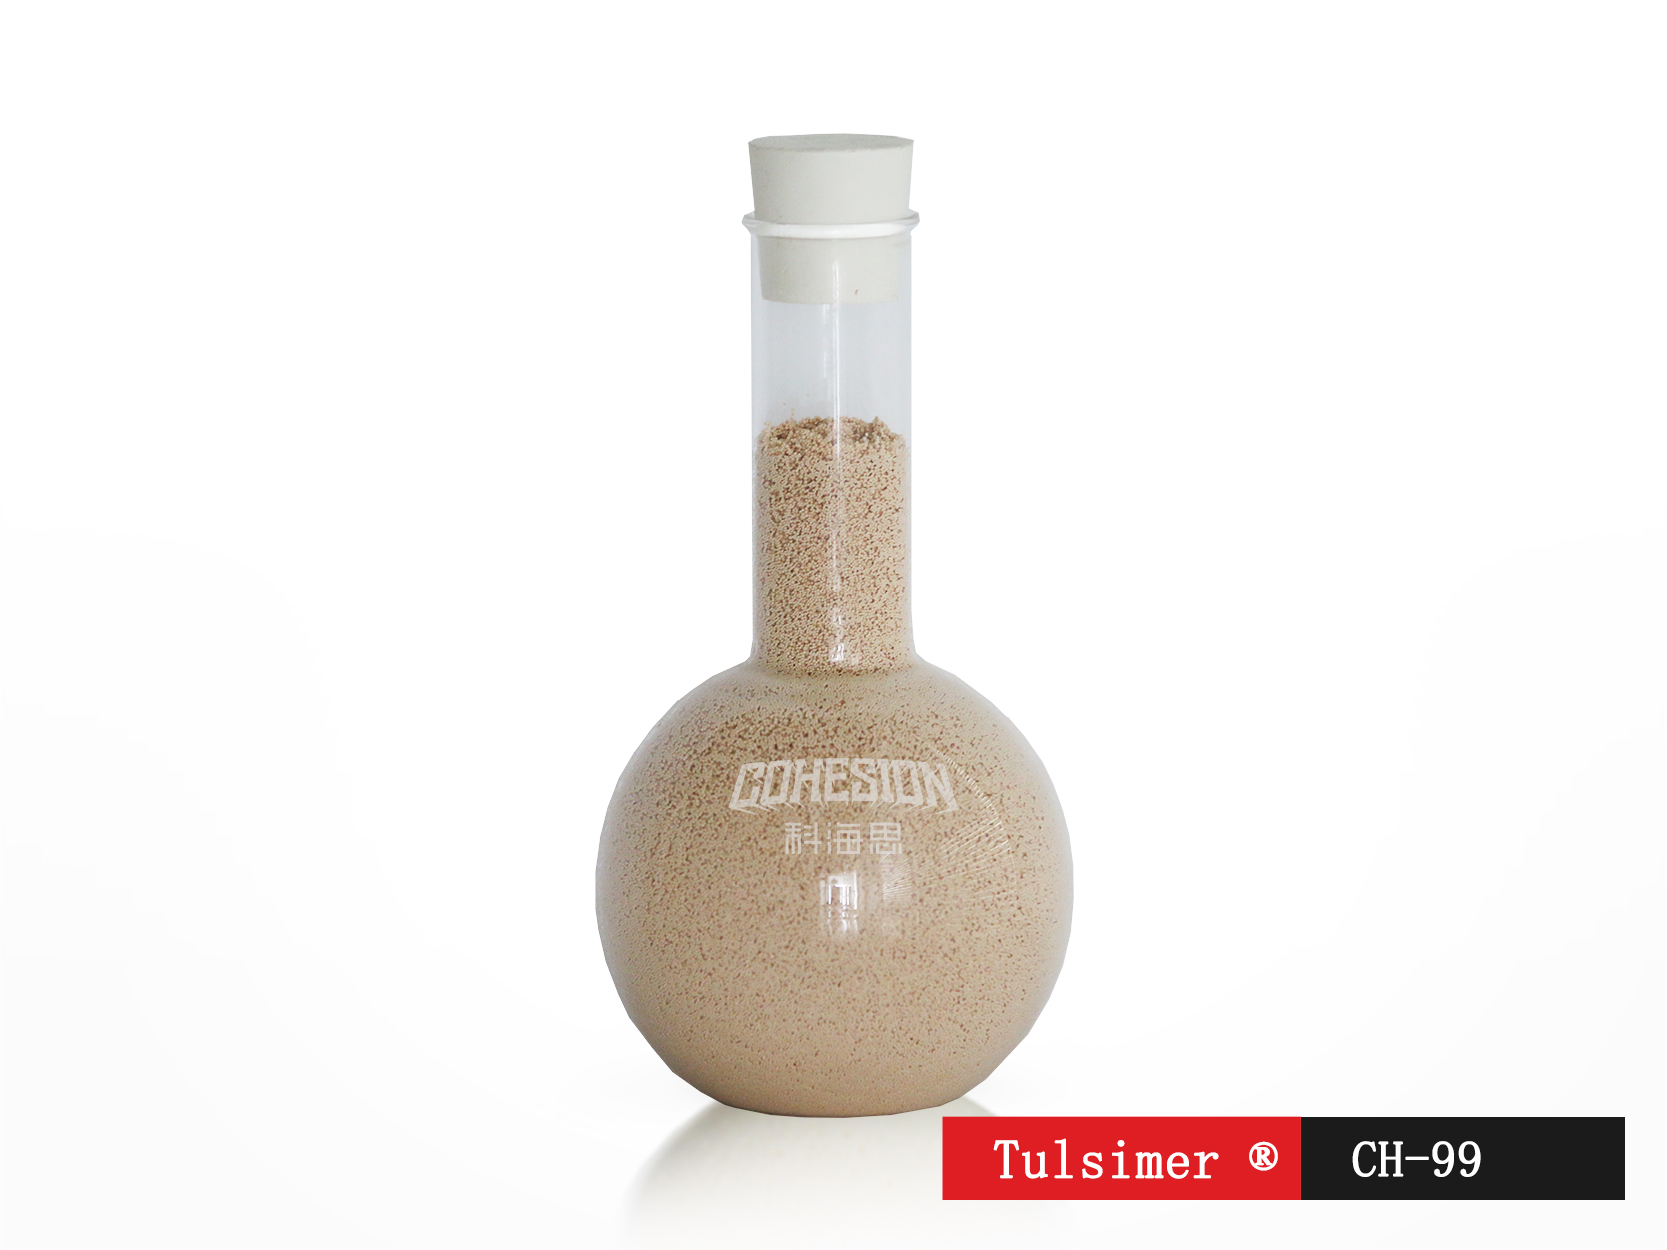 除硼树脂,ch-99-tulsimer